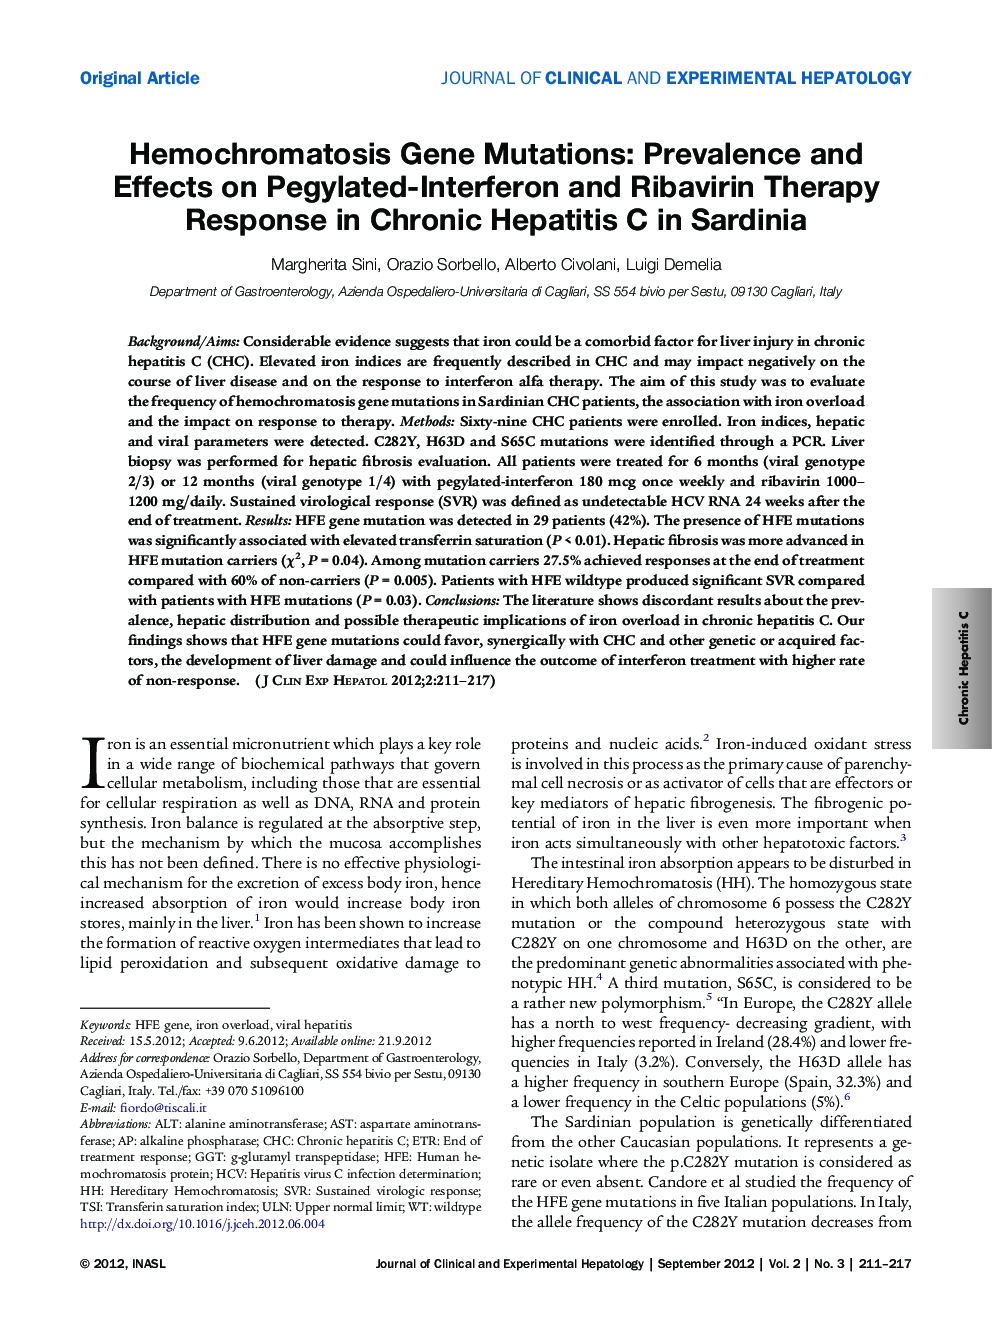 Hemochromatosis Gene Mutations: Prevalence and Effects on Pegylated-Interferon and Ribavirin Therapy Response in Chronic Hepatitis C in Sardinia